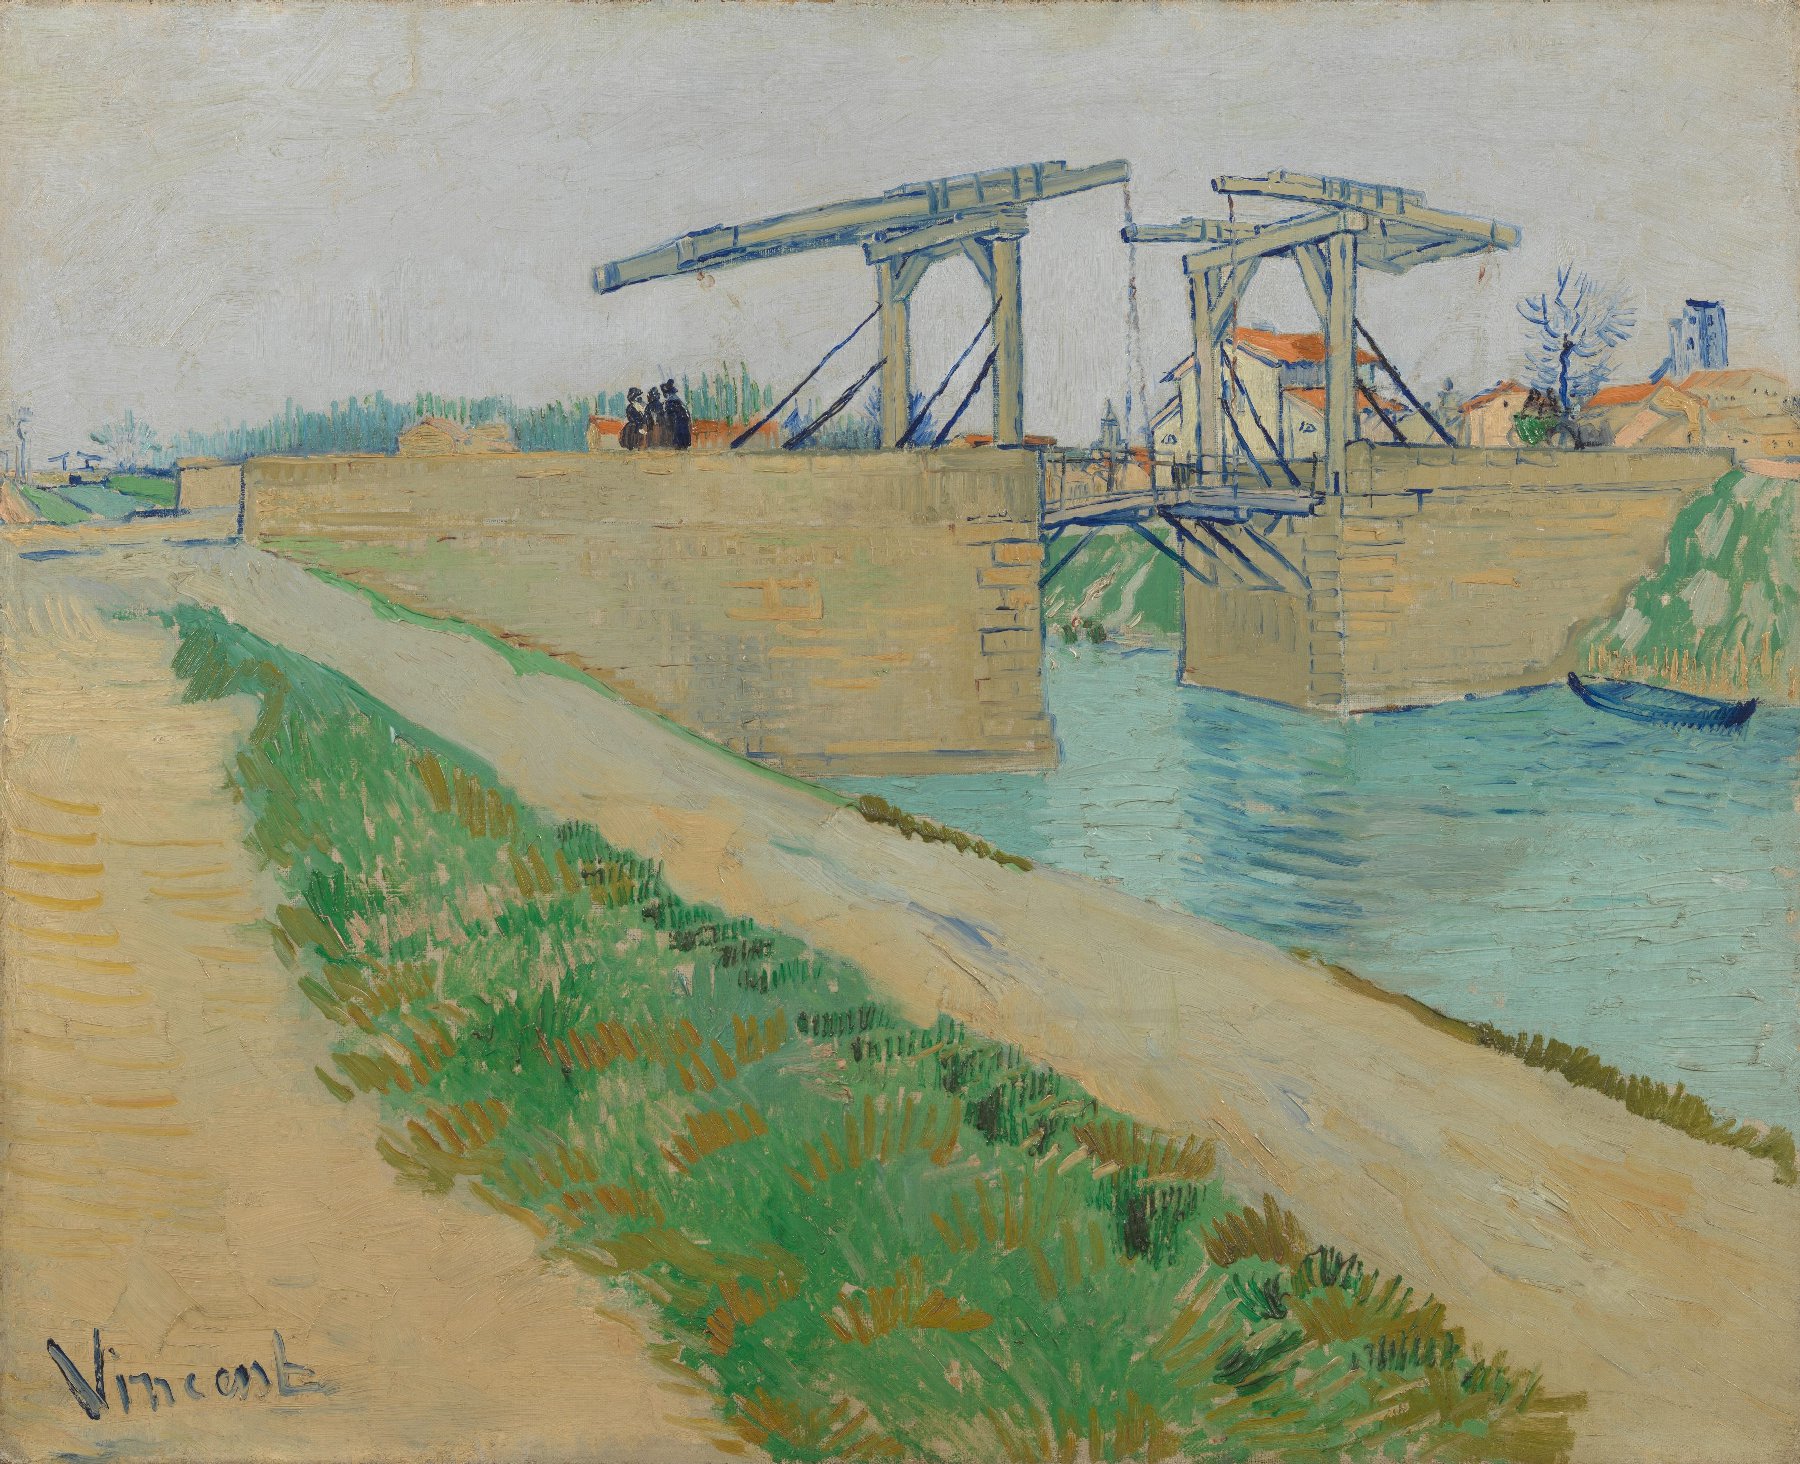 De brug van Langlois Vincent van Gogh (1853 - 1890), Arles, maart 1888